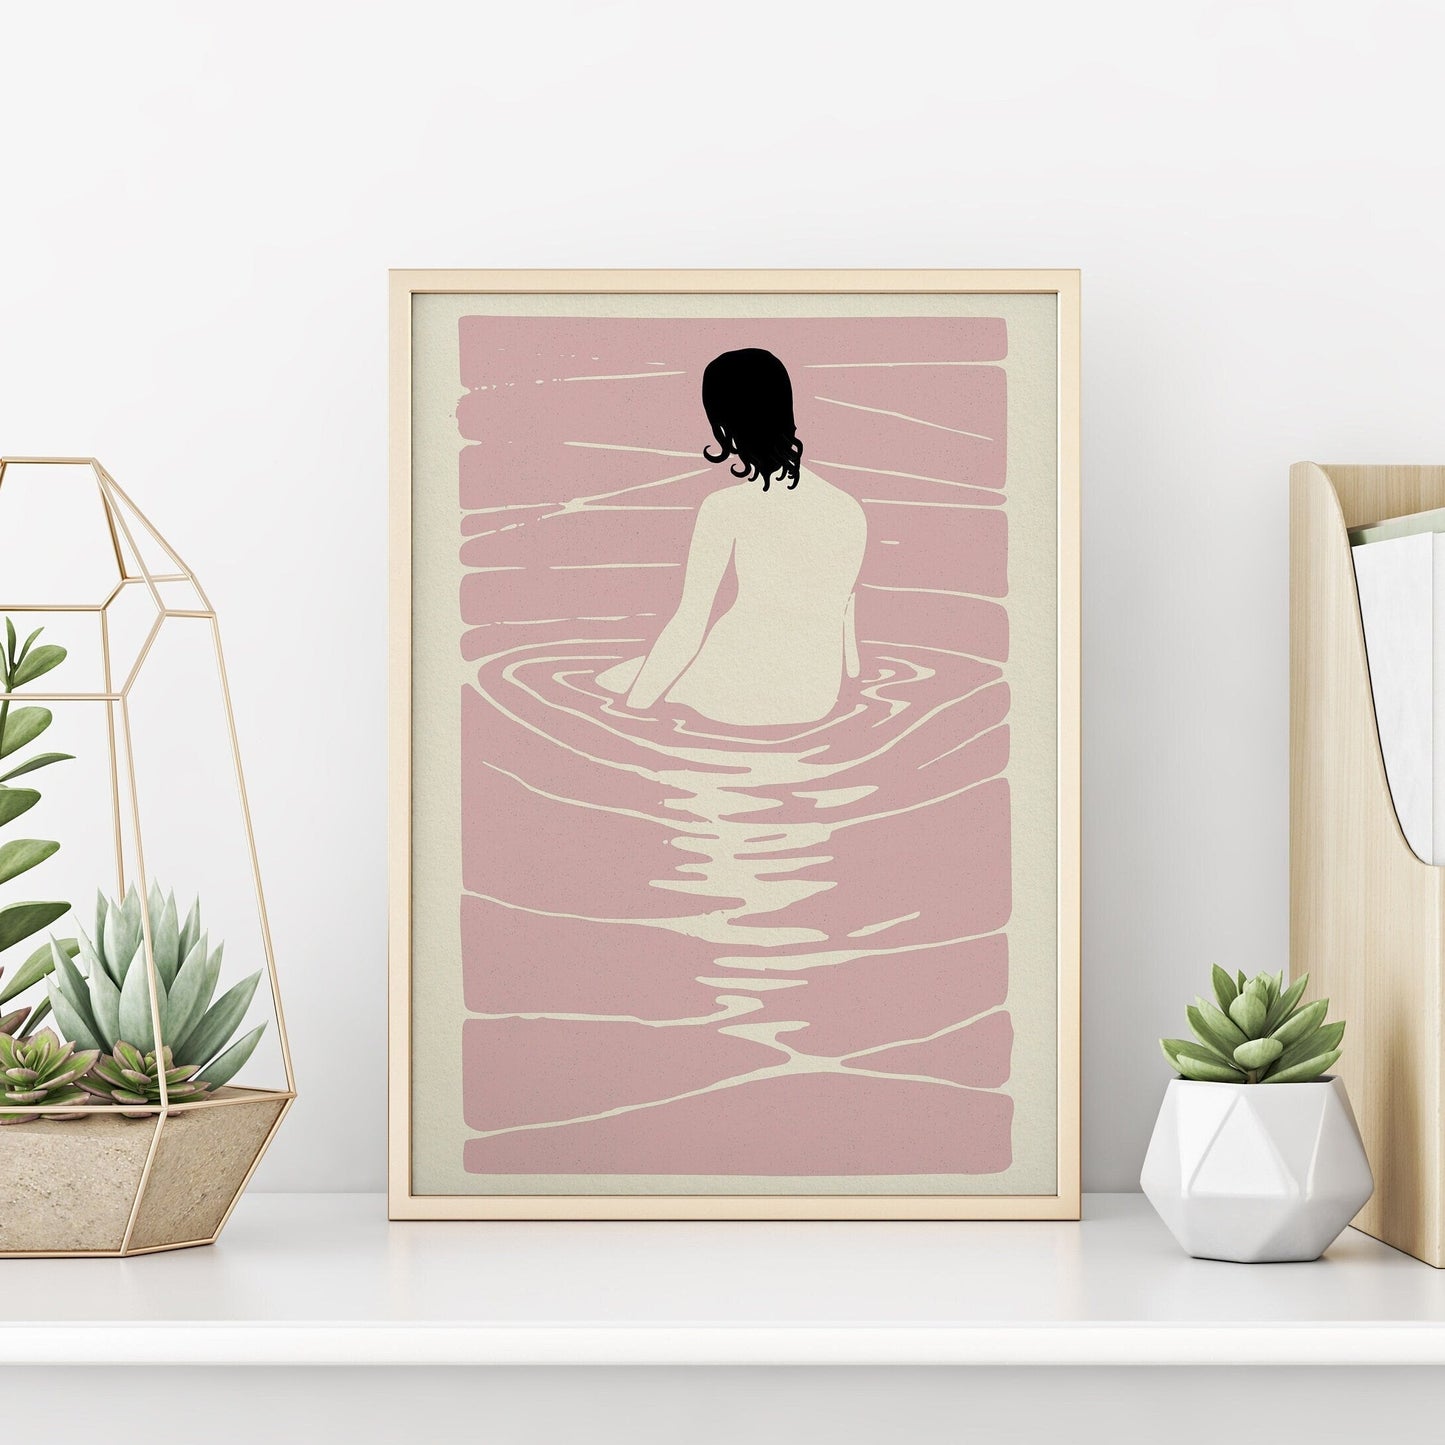 Bathing Woman Print | Bathroom Decor | Swimming Poster | Japandi Style | Japanese Wall Art